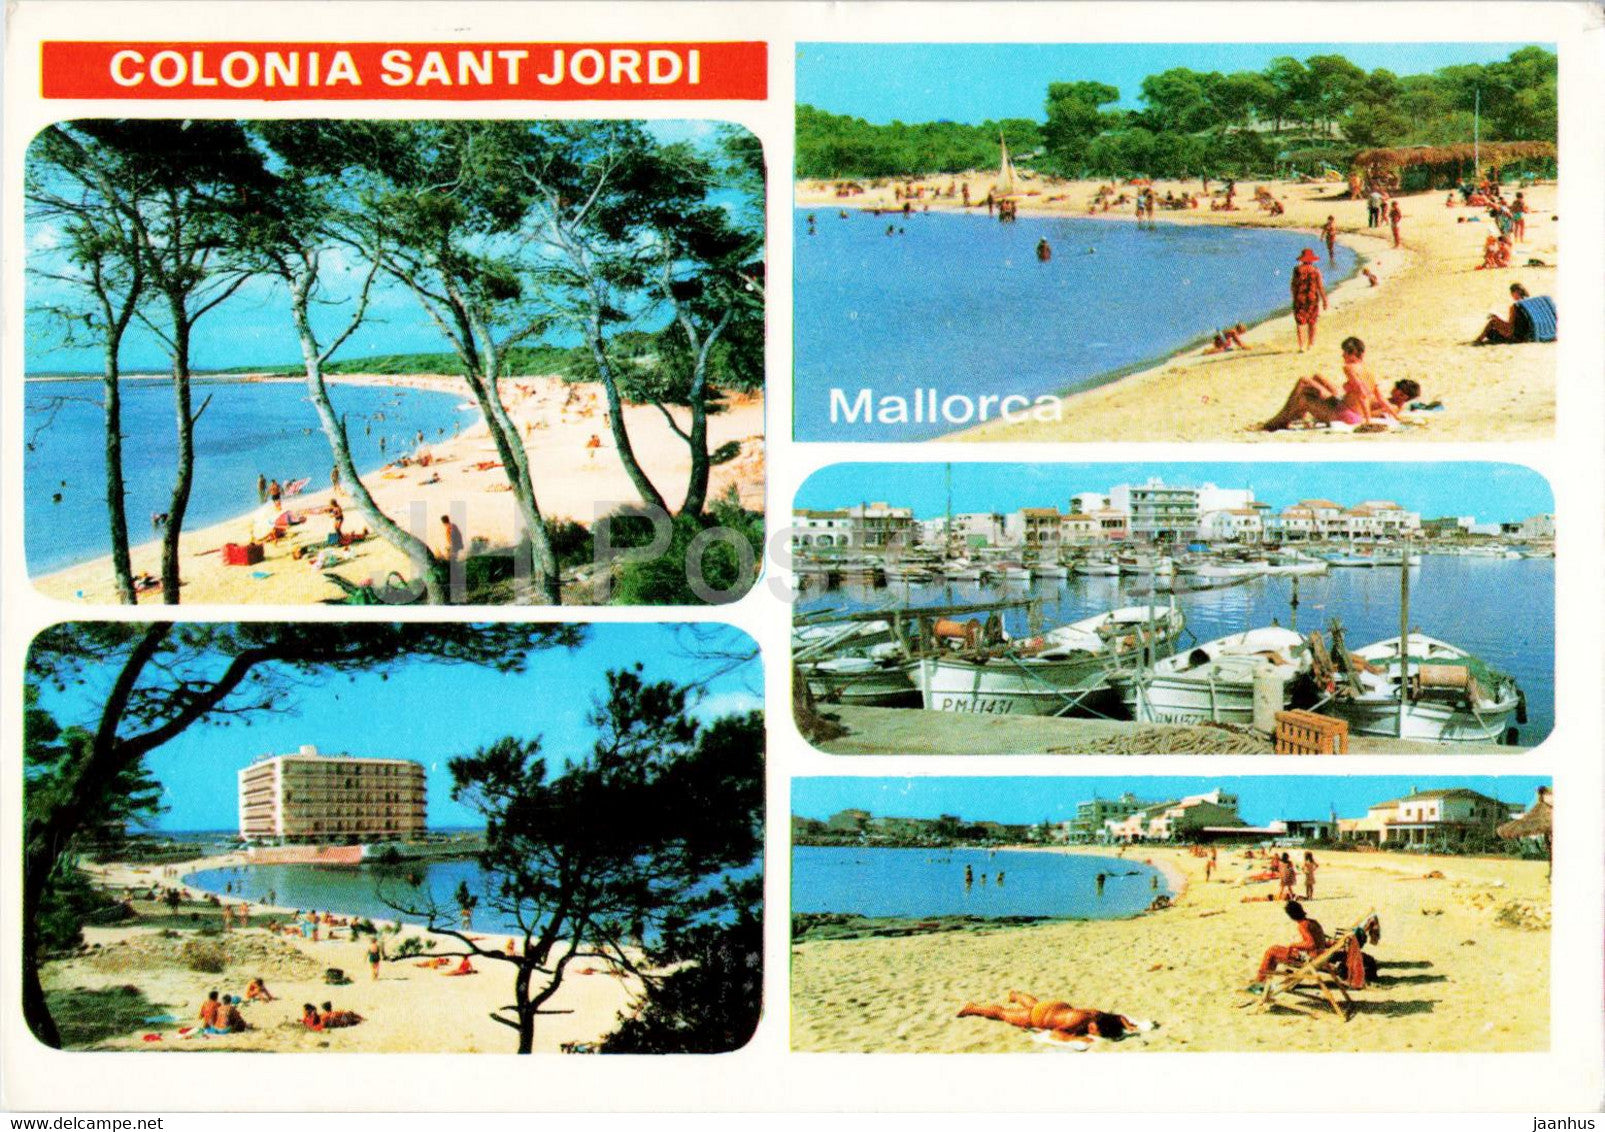 Colonia Sant Jordi - Mallorca - multiview - boat - 1978 - Spain - used - JH Postcards